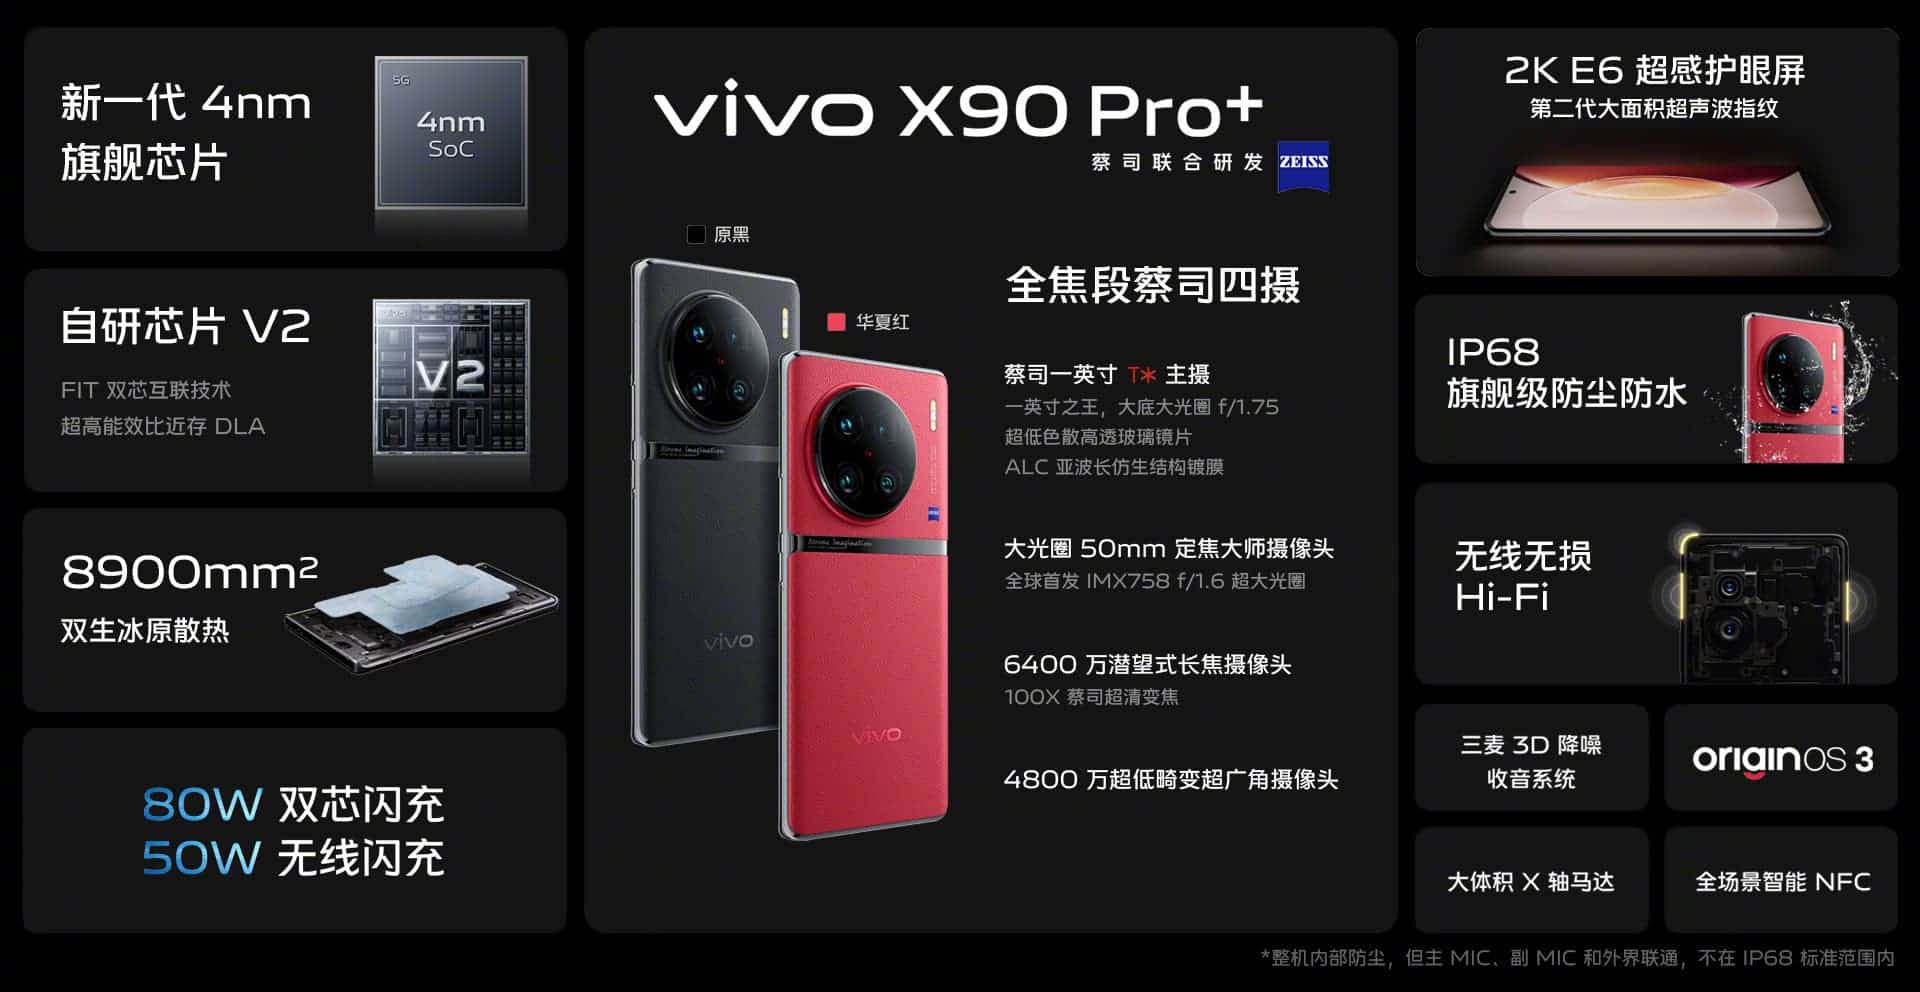 VIVO X90 Pro+ specs